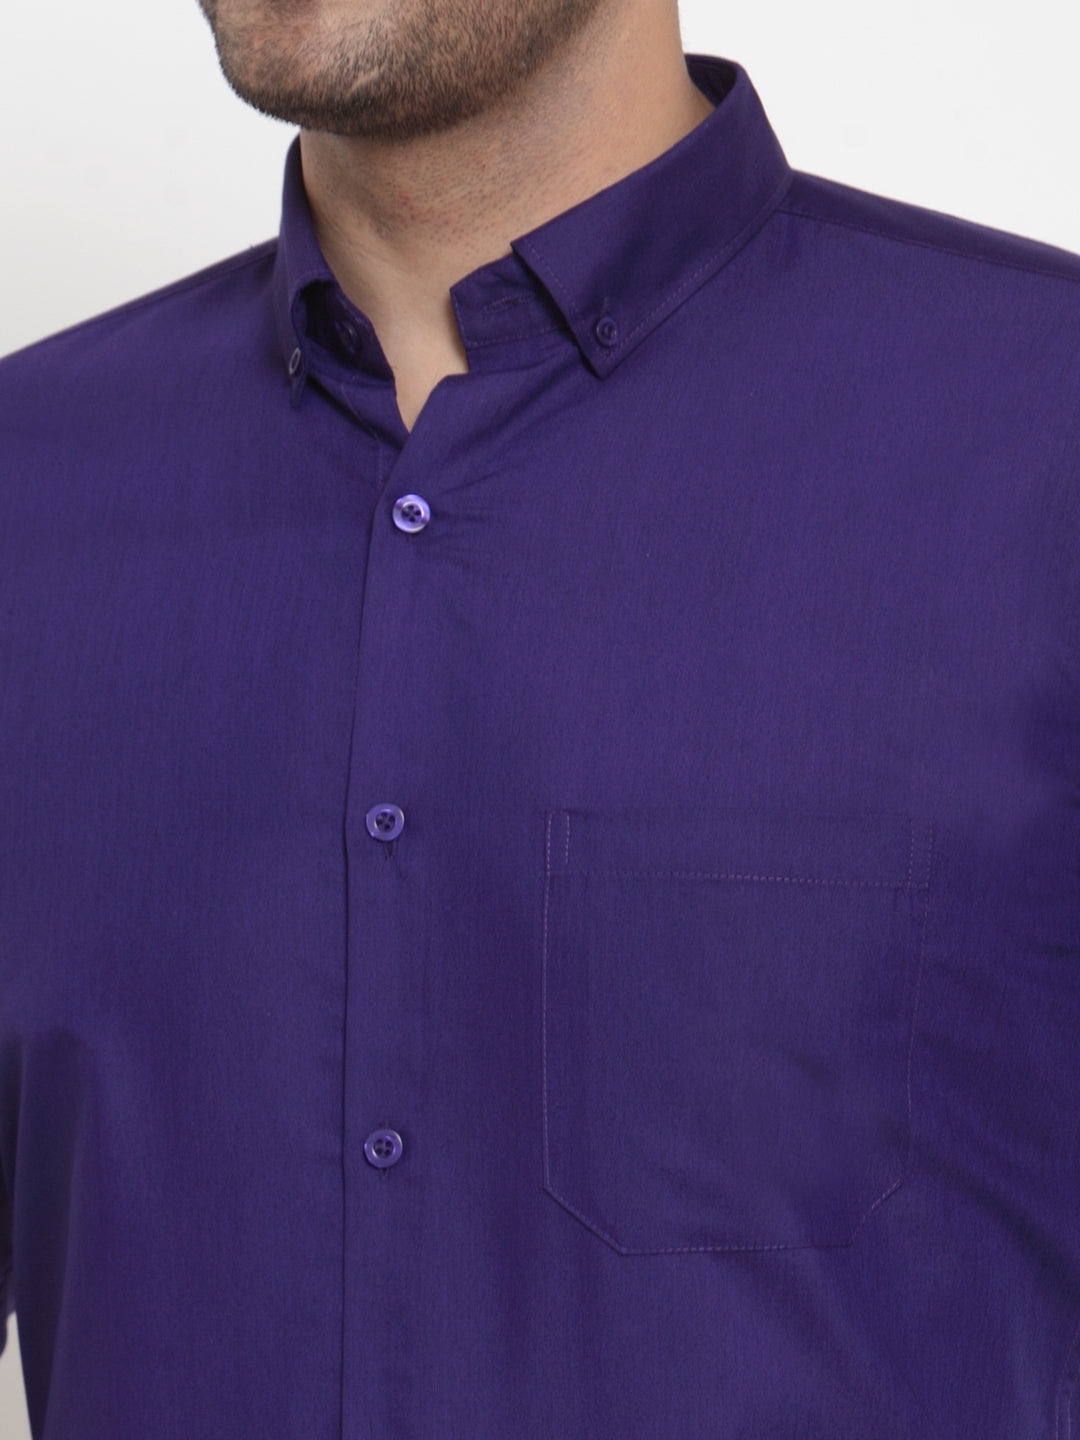 Men's Purple Cotton Solid Button Down Formal Shirts ( SF 713Purple ) - Jainish